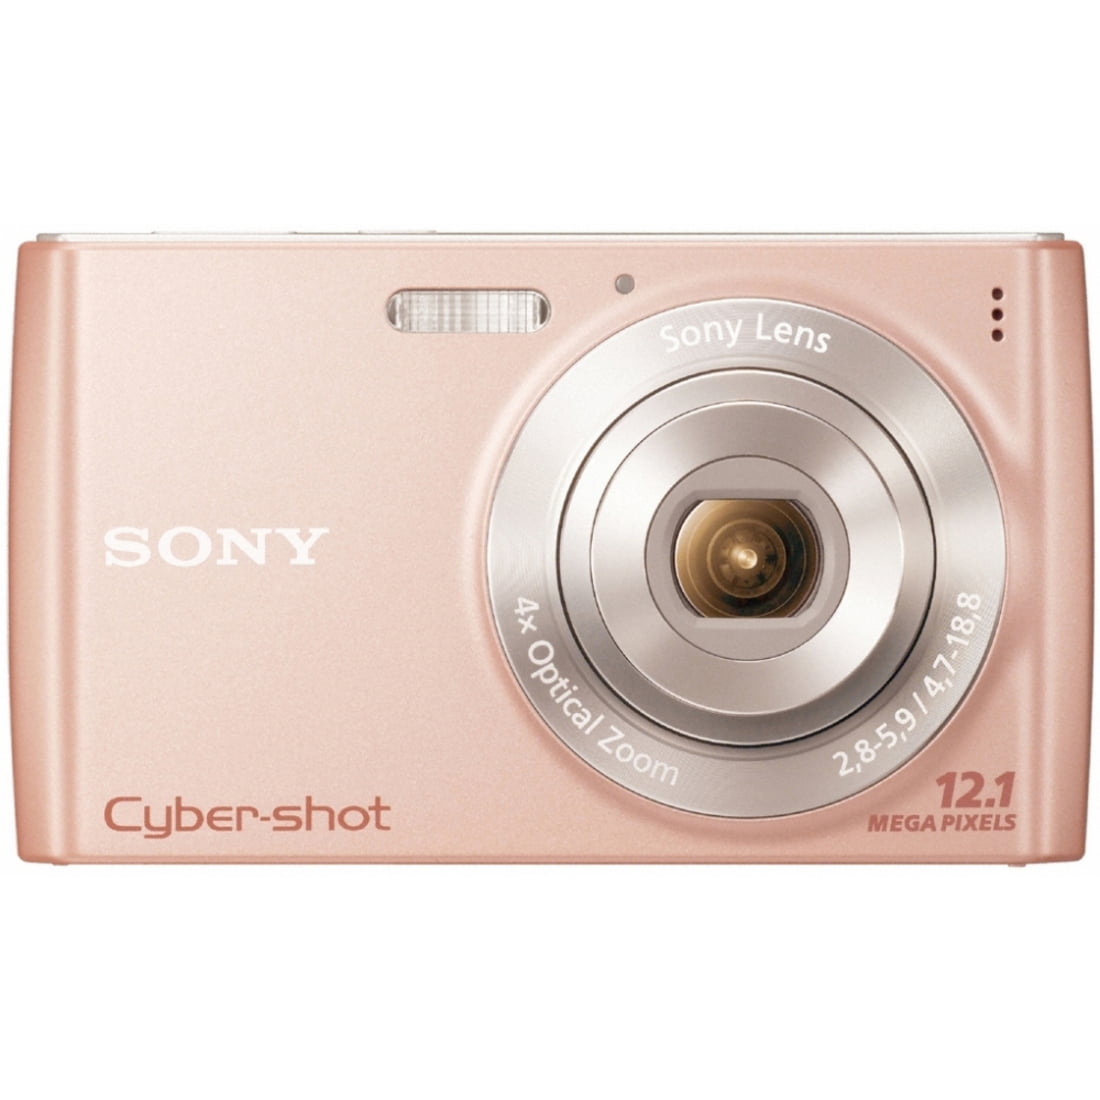 Camara digital compacta Sony Cyber-shot DSC-W520 